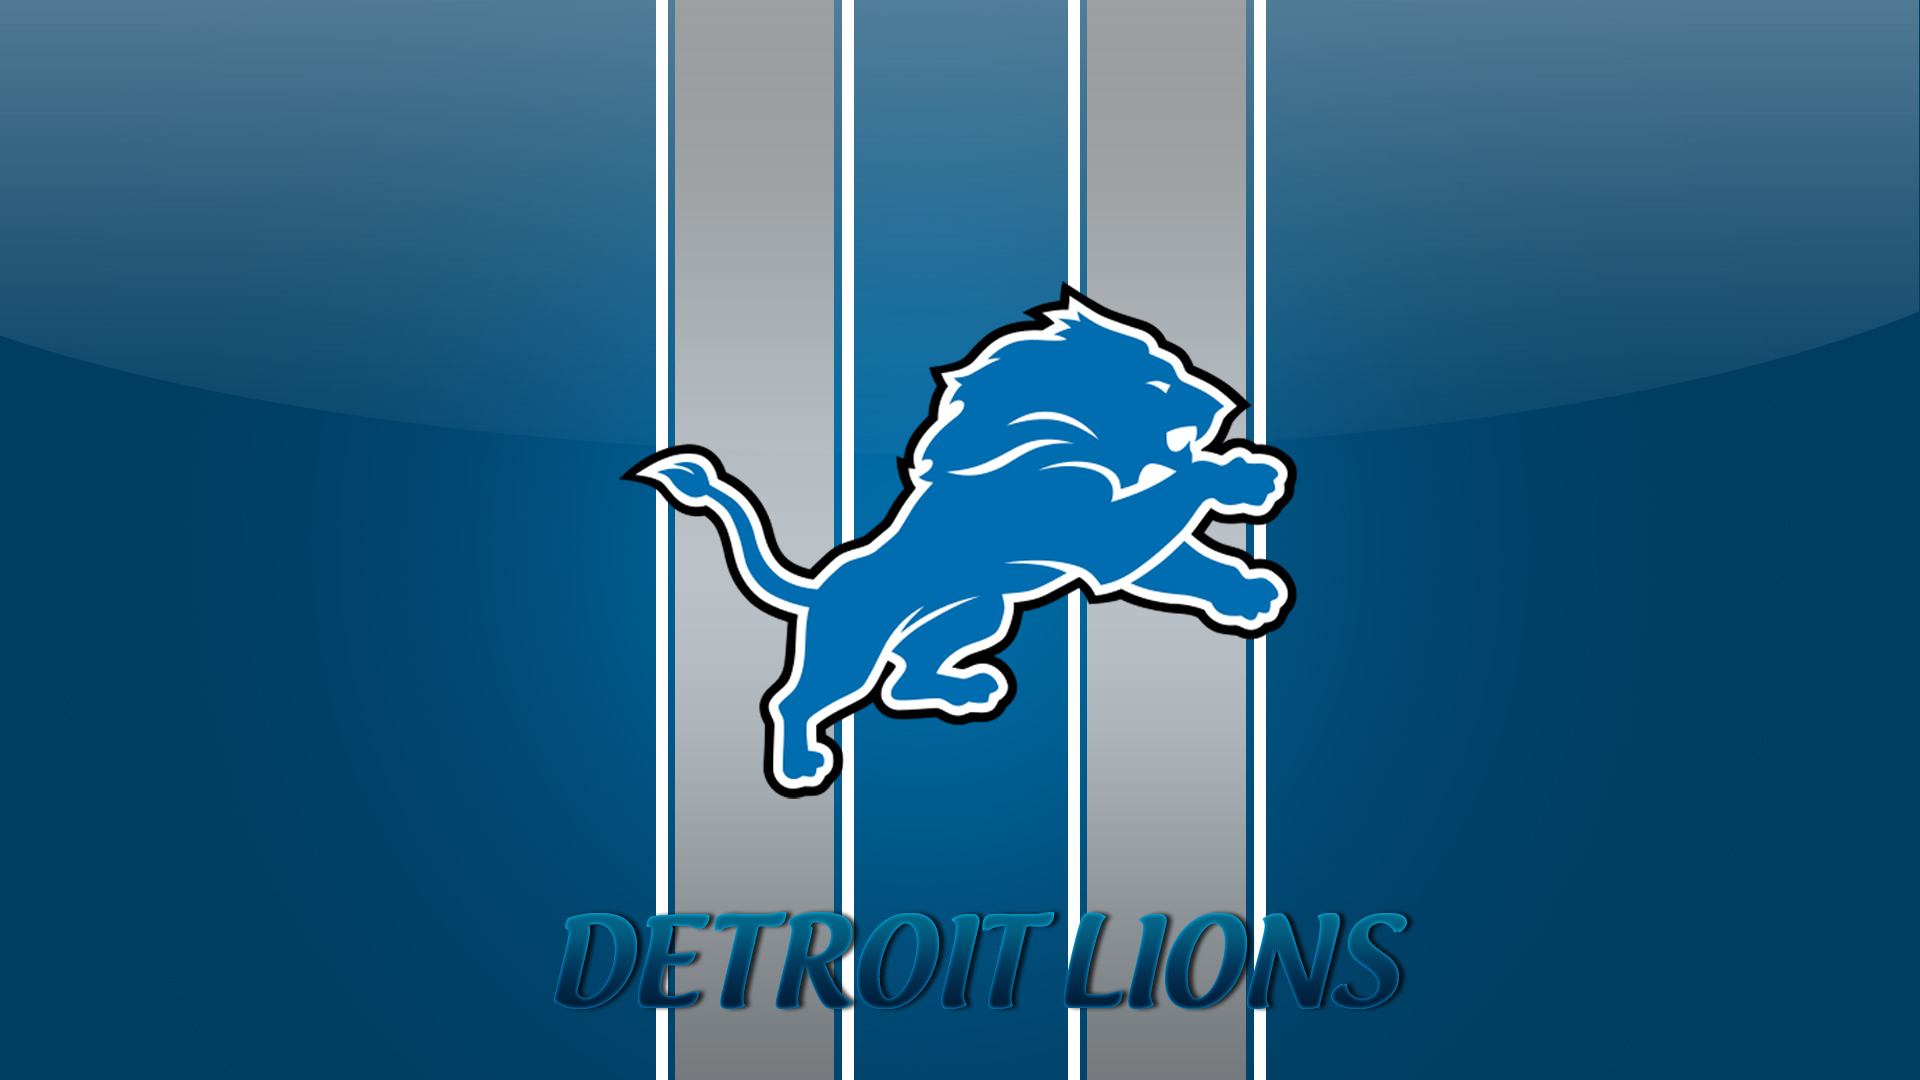 Detroit Lions Wallpaper HD | PixelsTalk Net